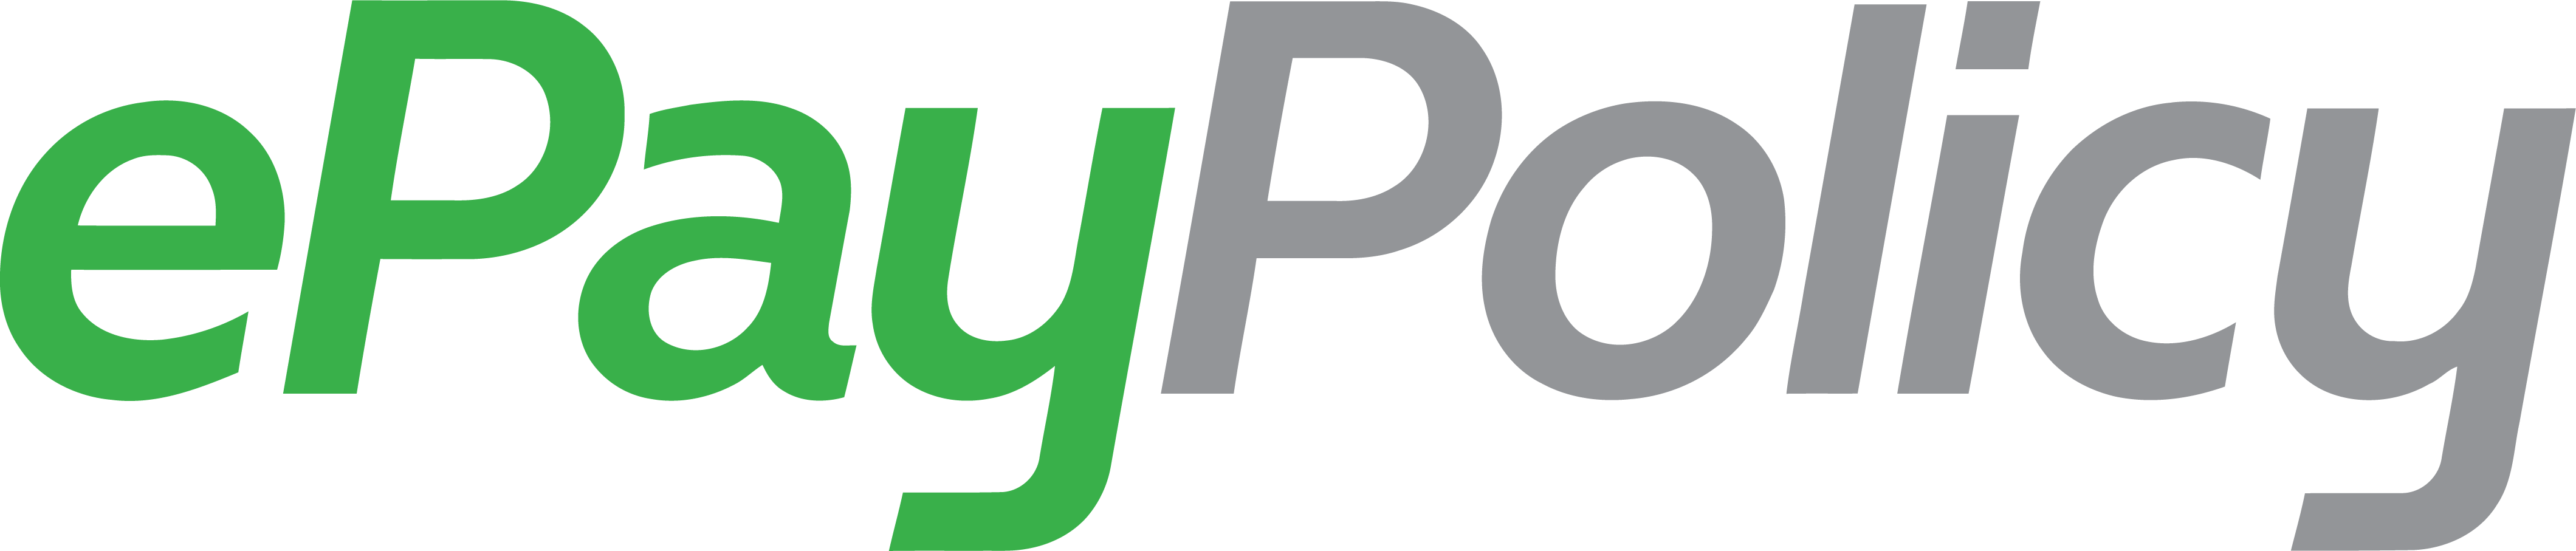 ePayPolicy logo, green and grey